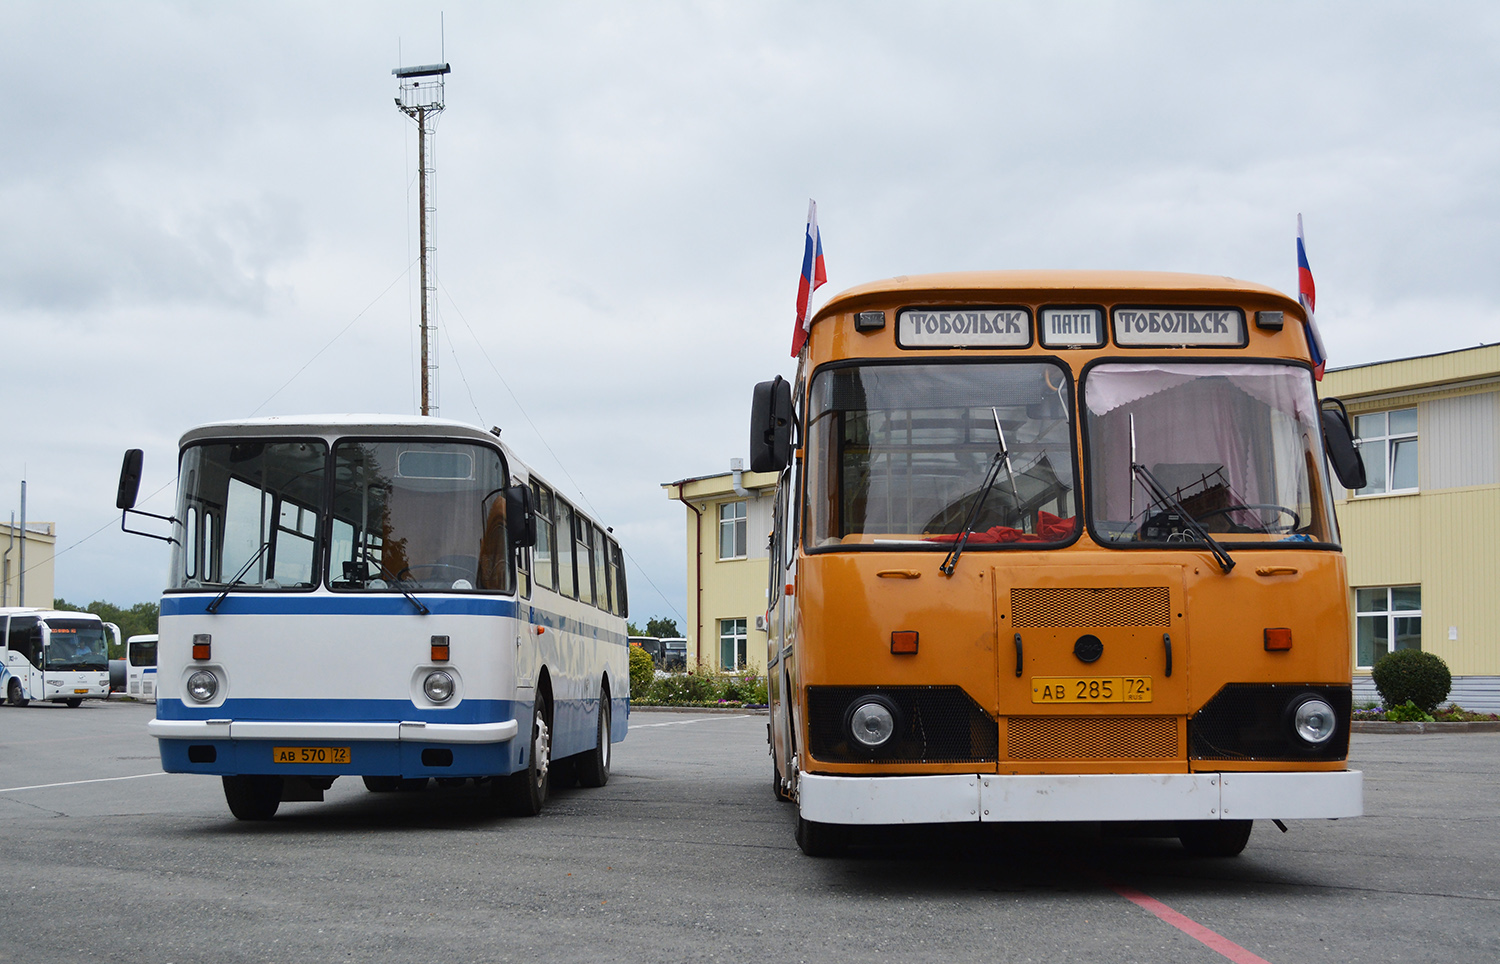 Tumen region — Buses organizations; Tumen region — Miscellaneous photos